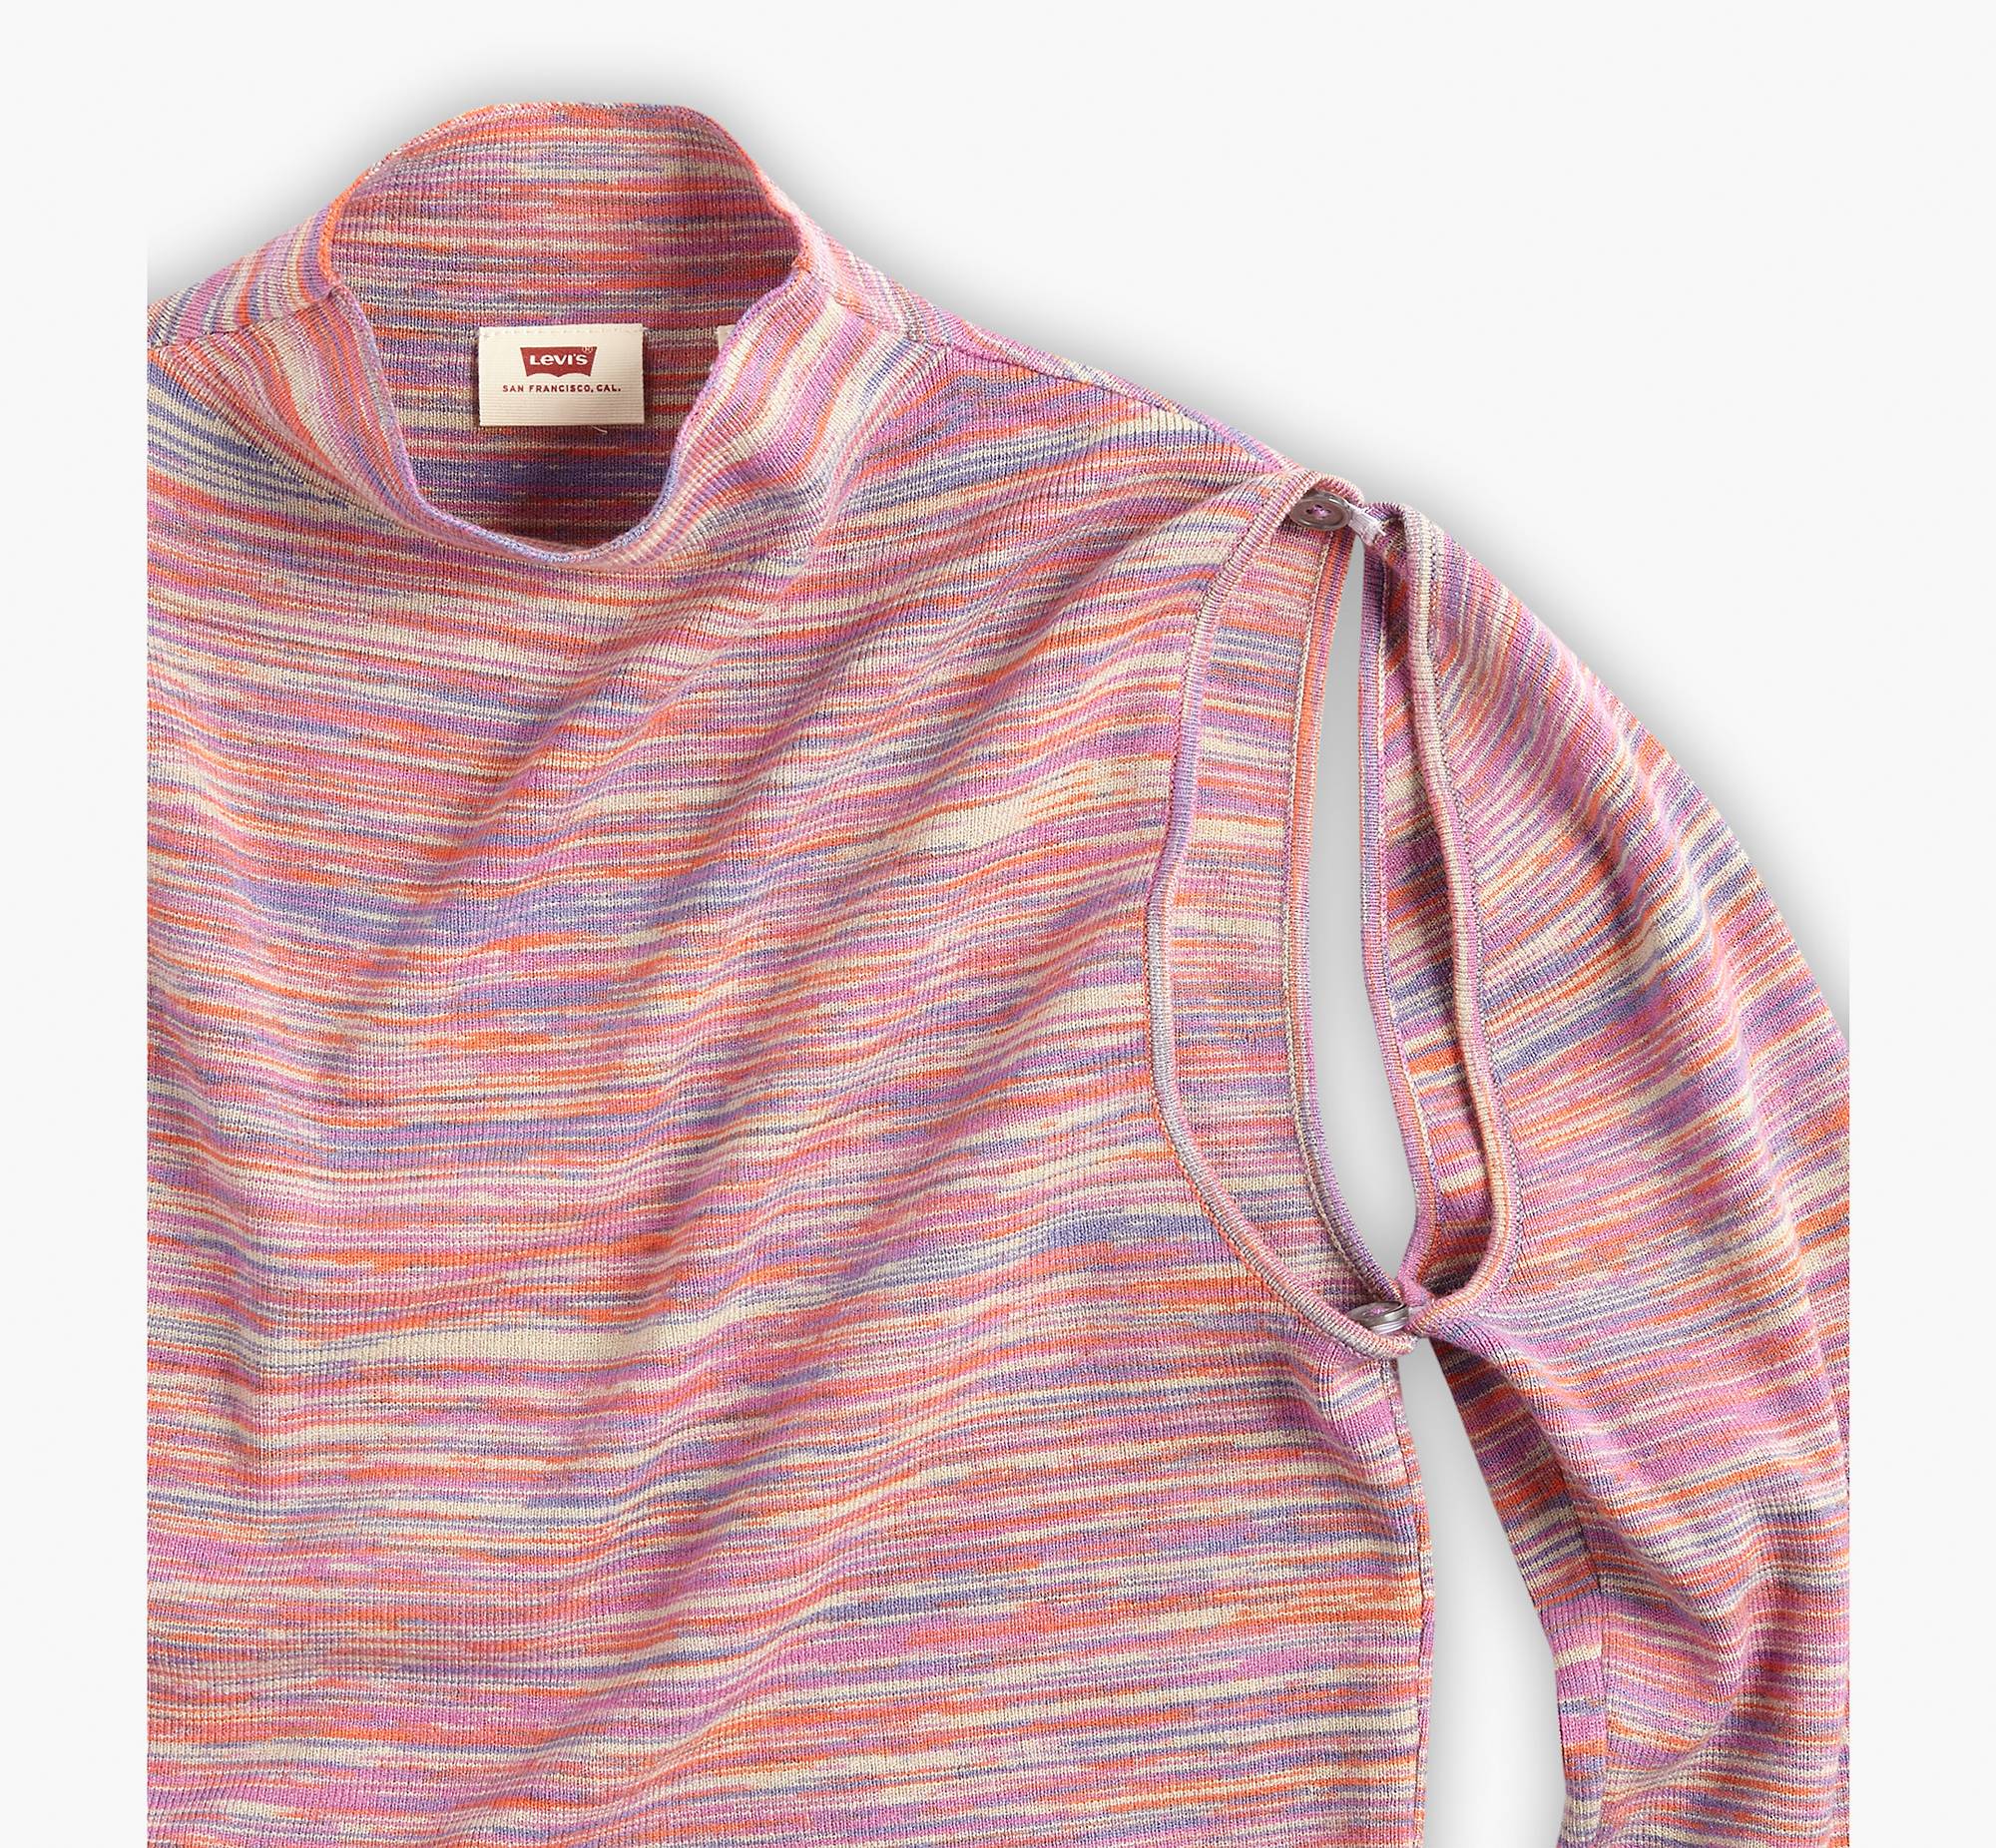 Jupiter Sweater 7